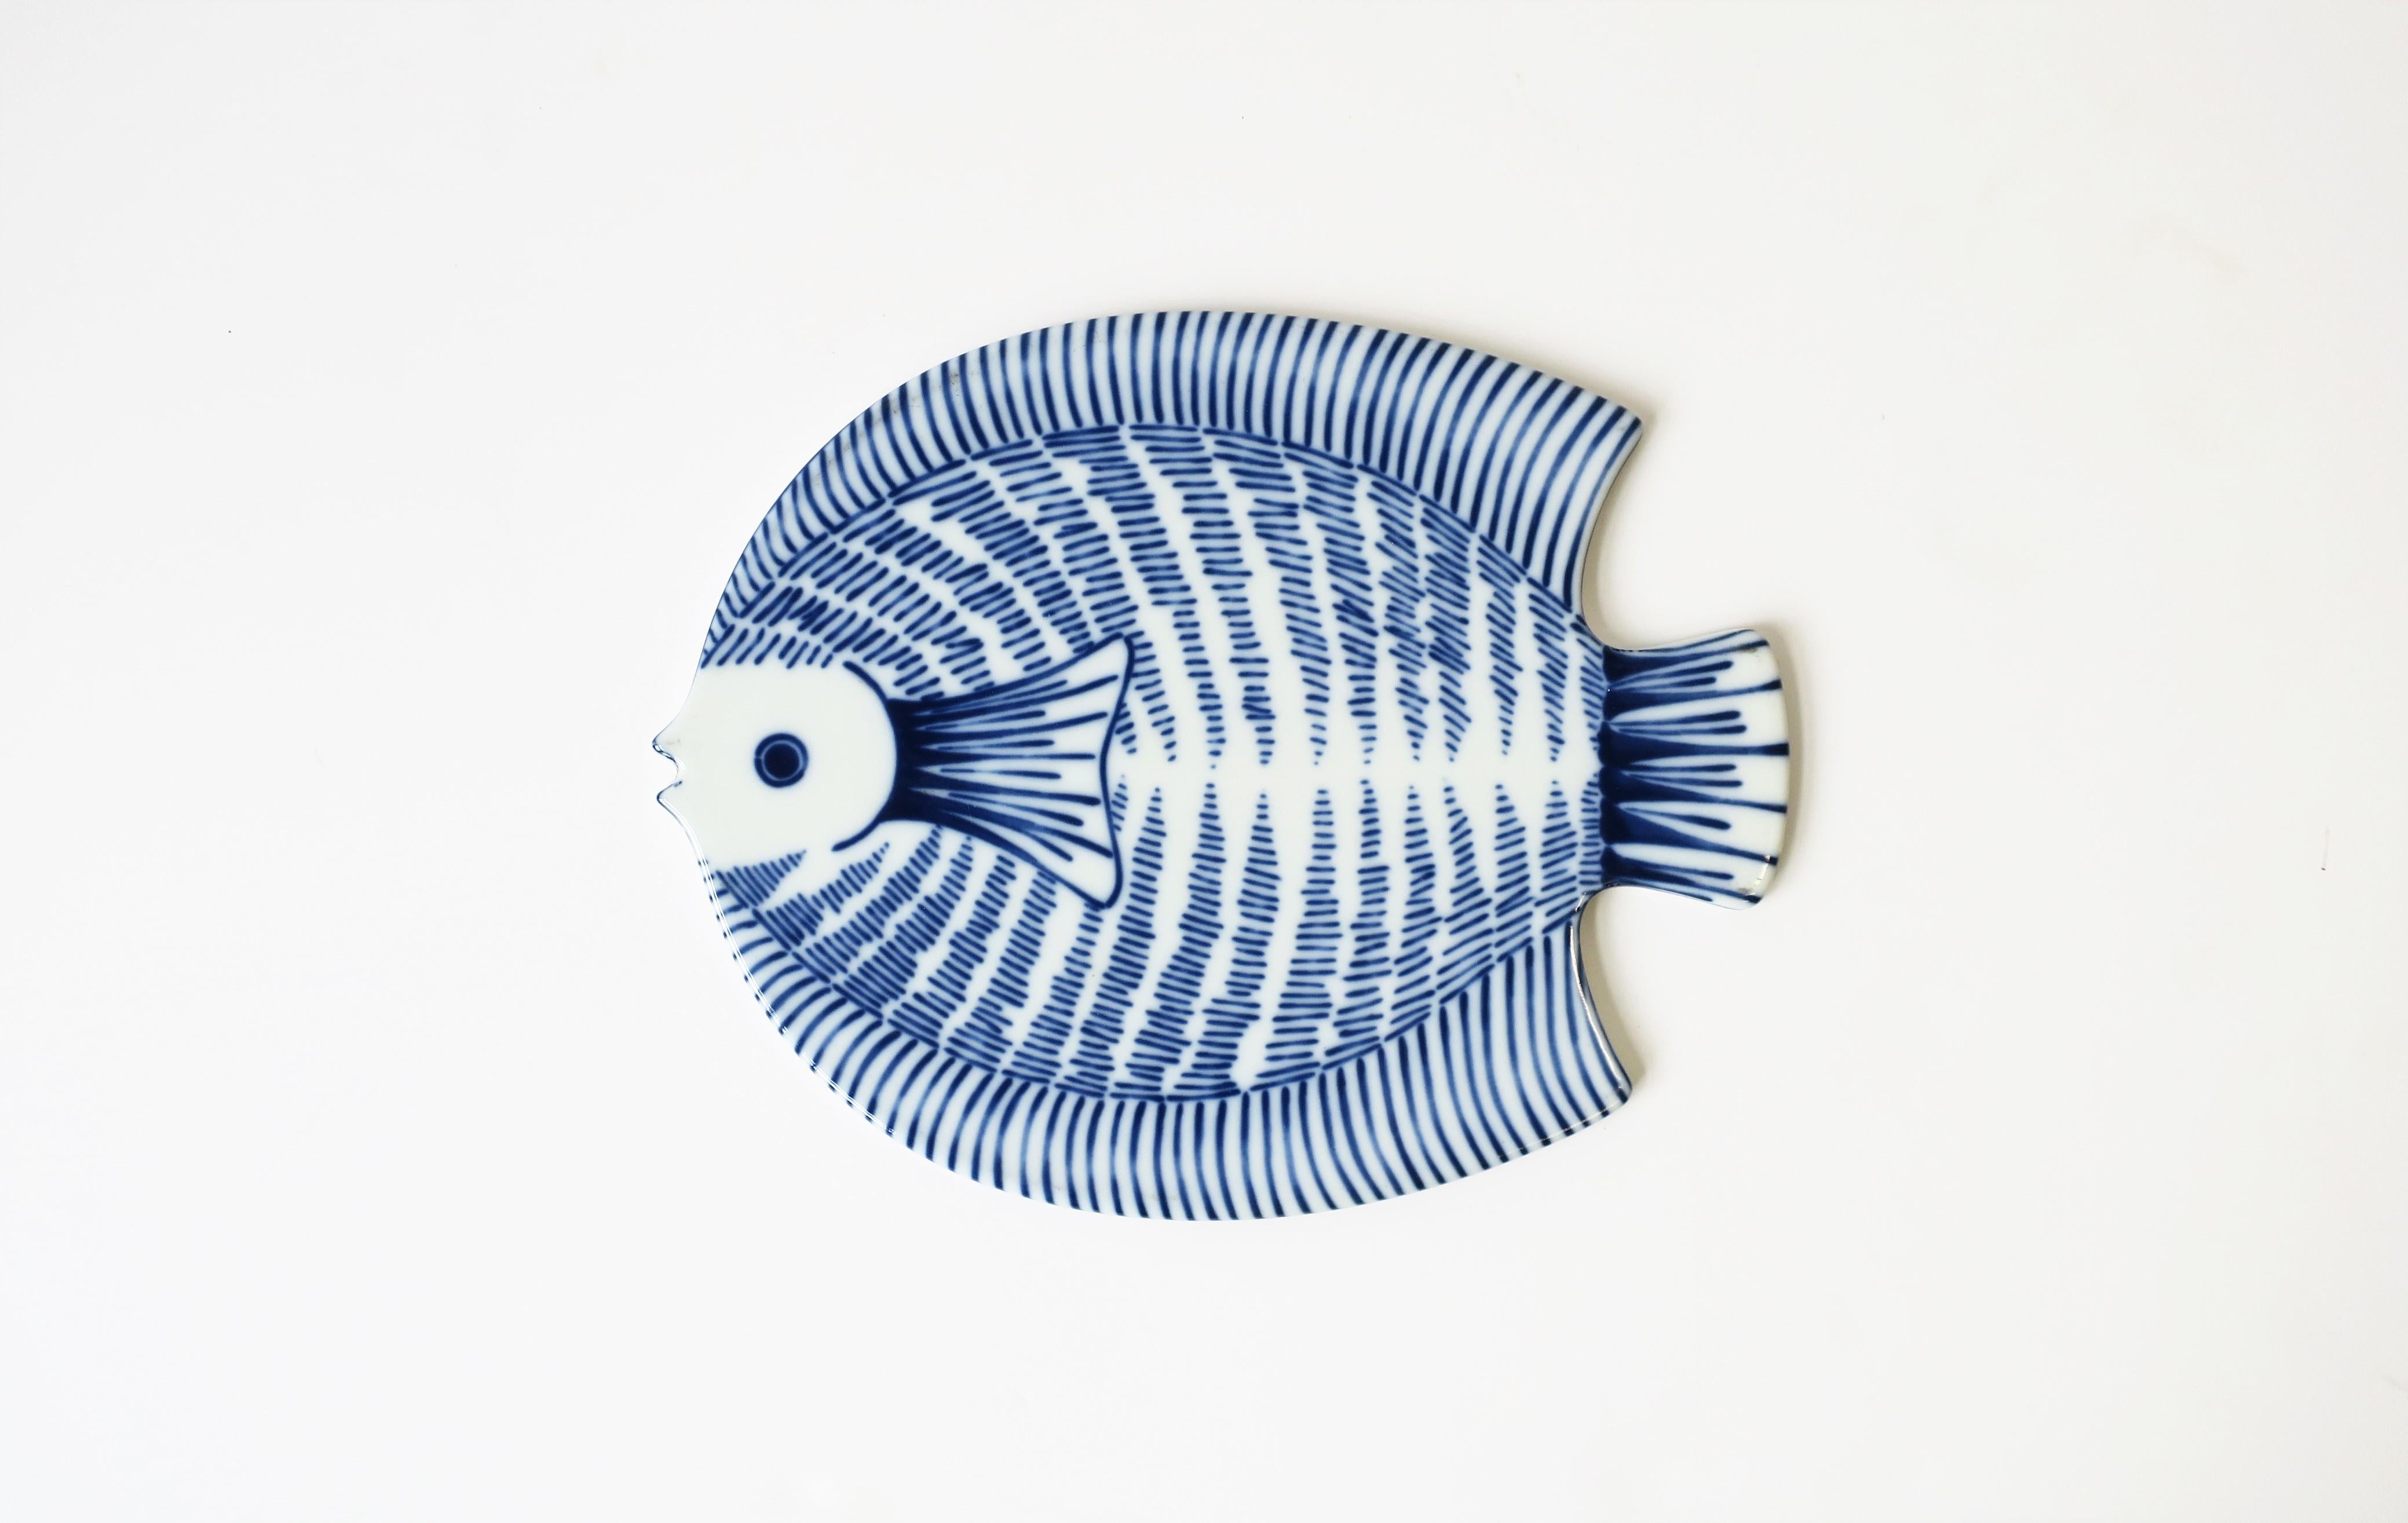 Glazed Vintage Blue and White Ceramic Fish Trivet or Wall Art